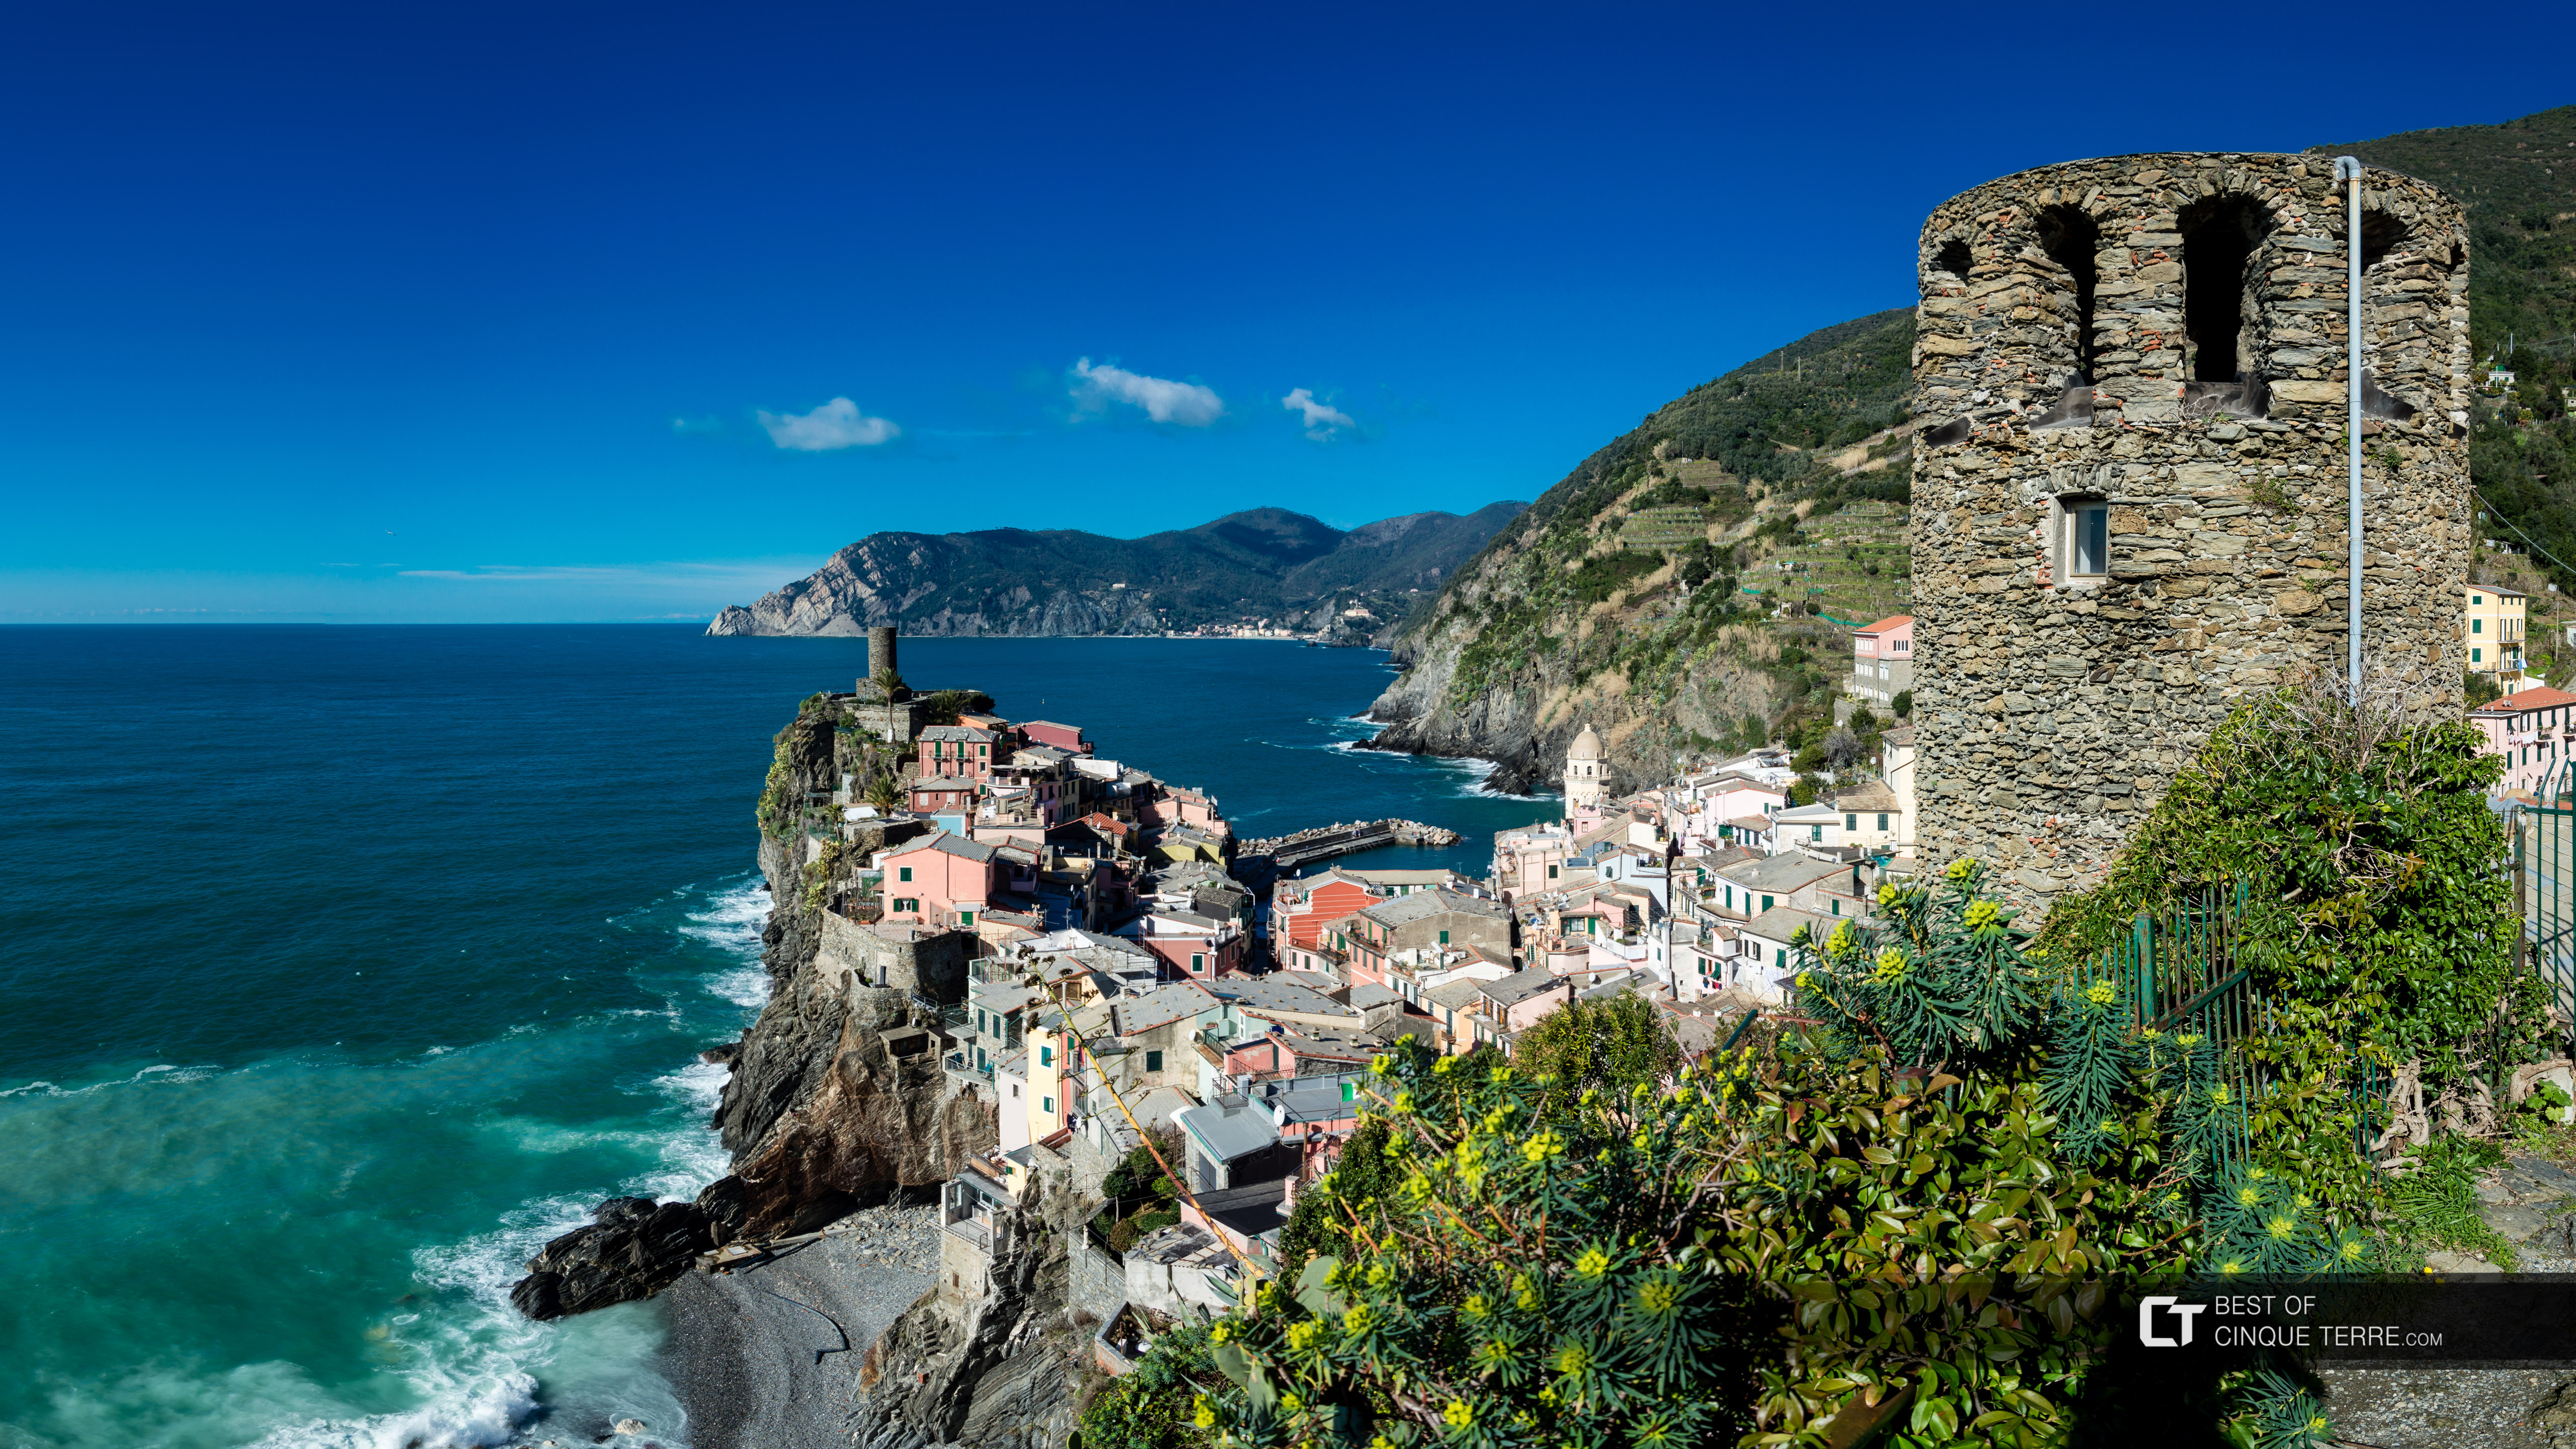 Panoramaansicht des Dorfs vom Sentiero Azzurro, Vernazza, Cinque Terre, Italien